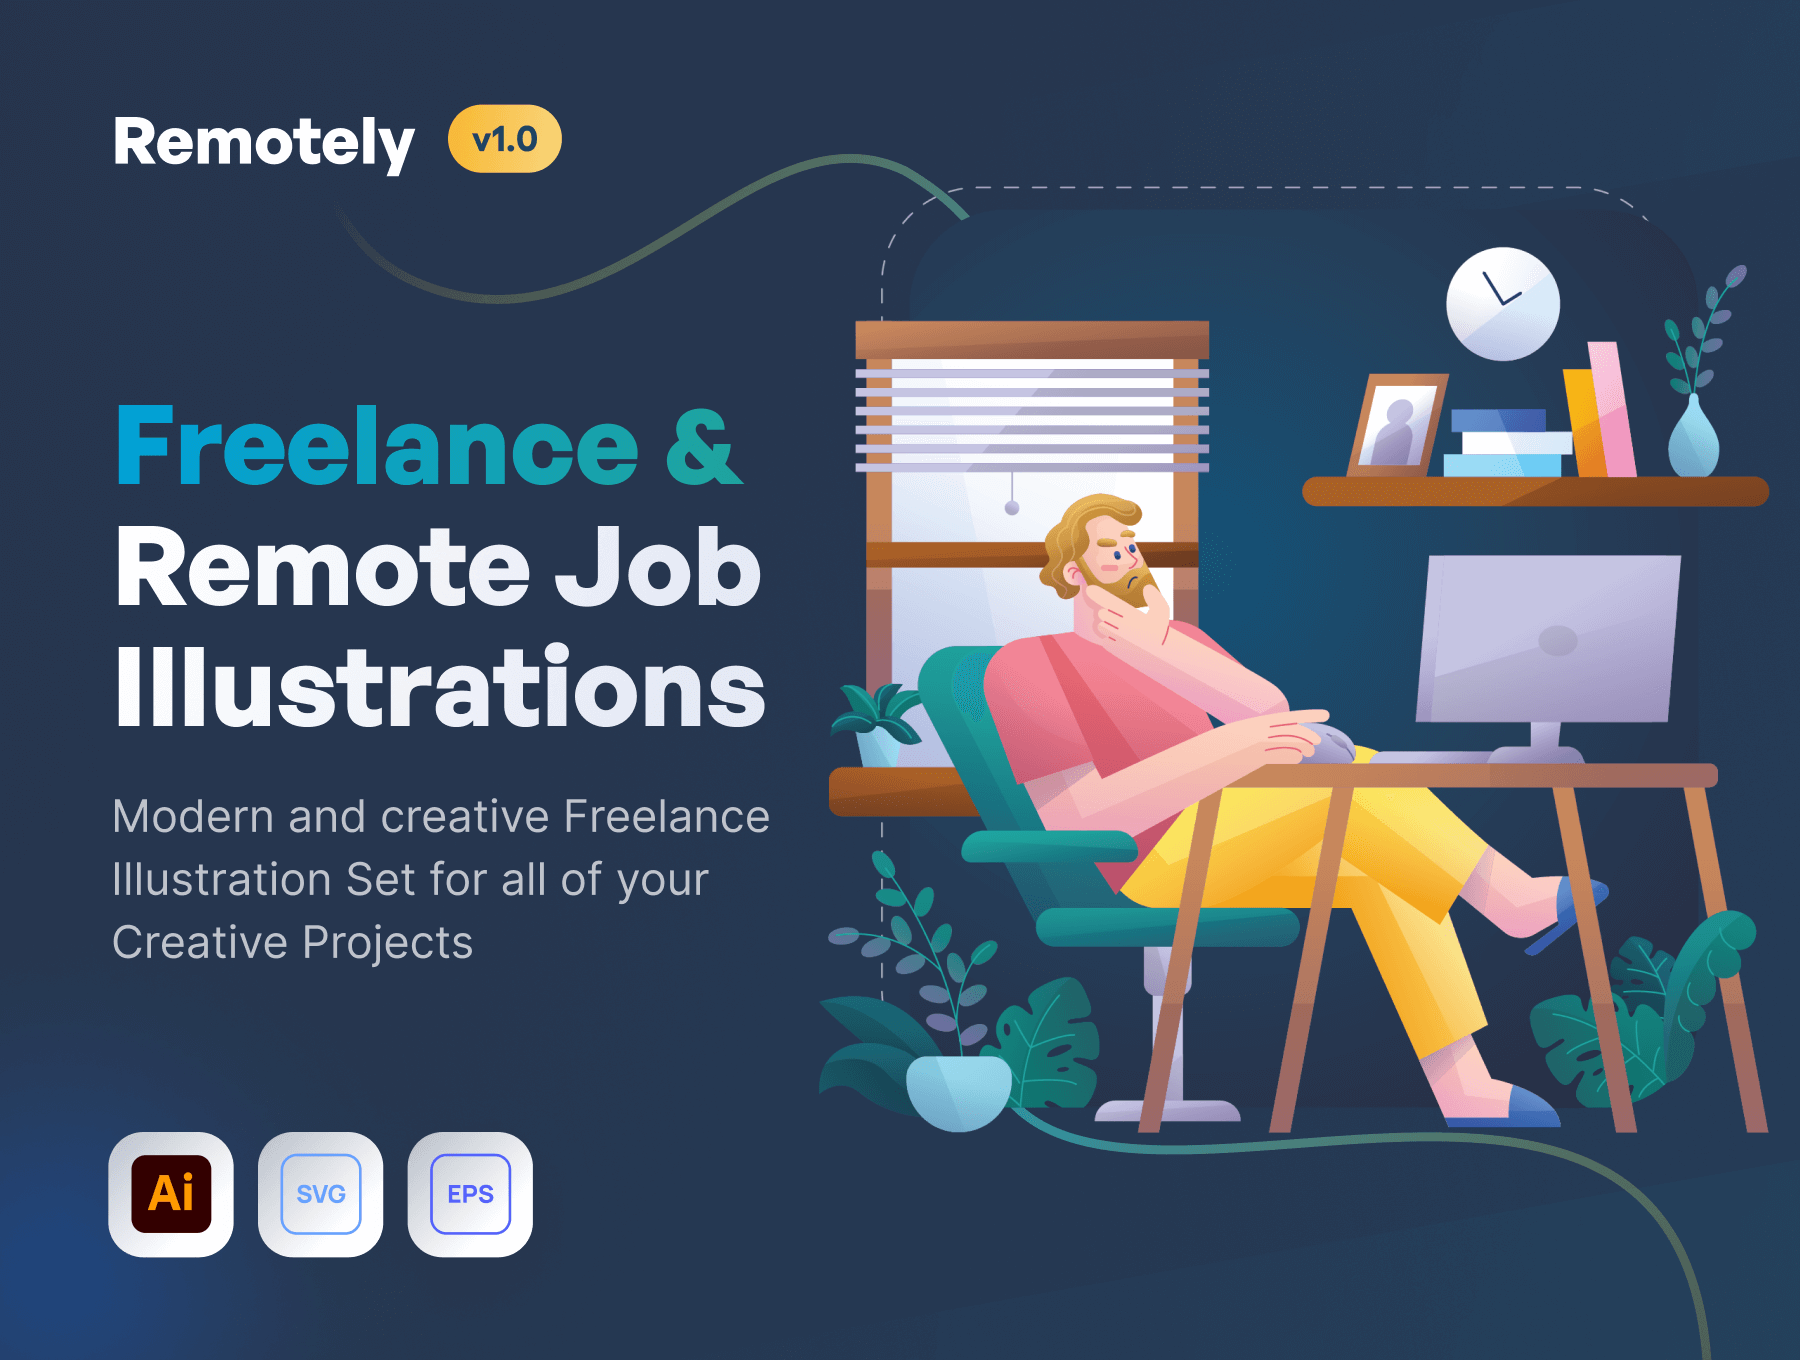 远程-自由职业者和远程工作插图素材Remotely – Freelance & Remote Job Illustrations插图